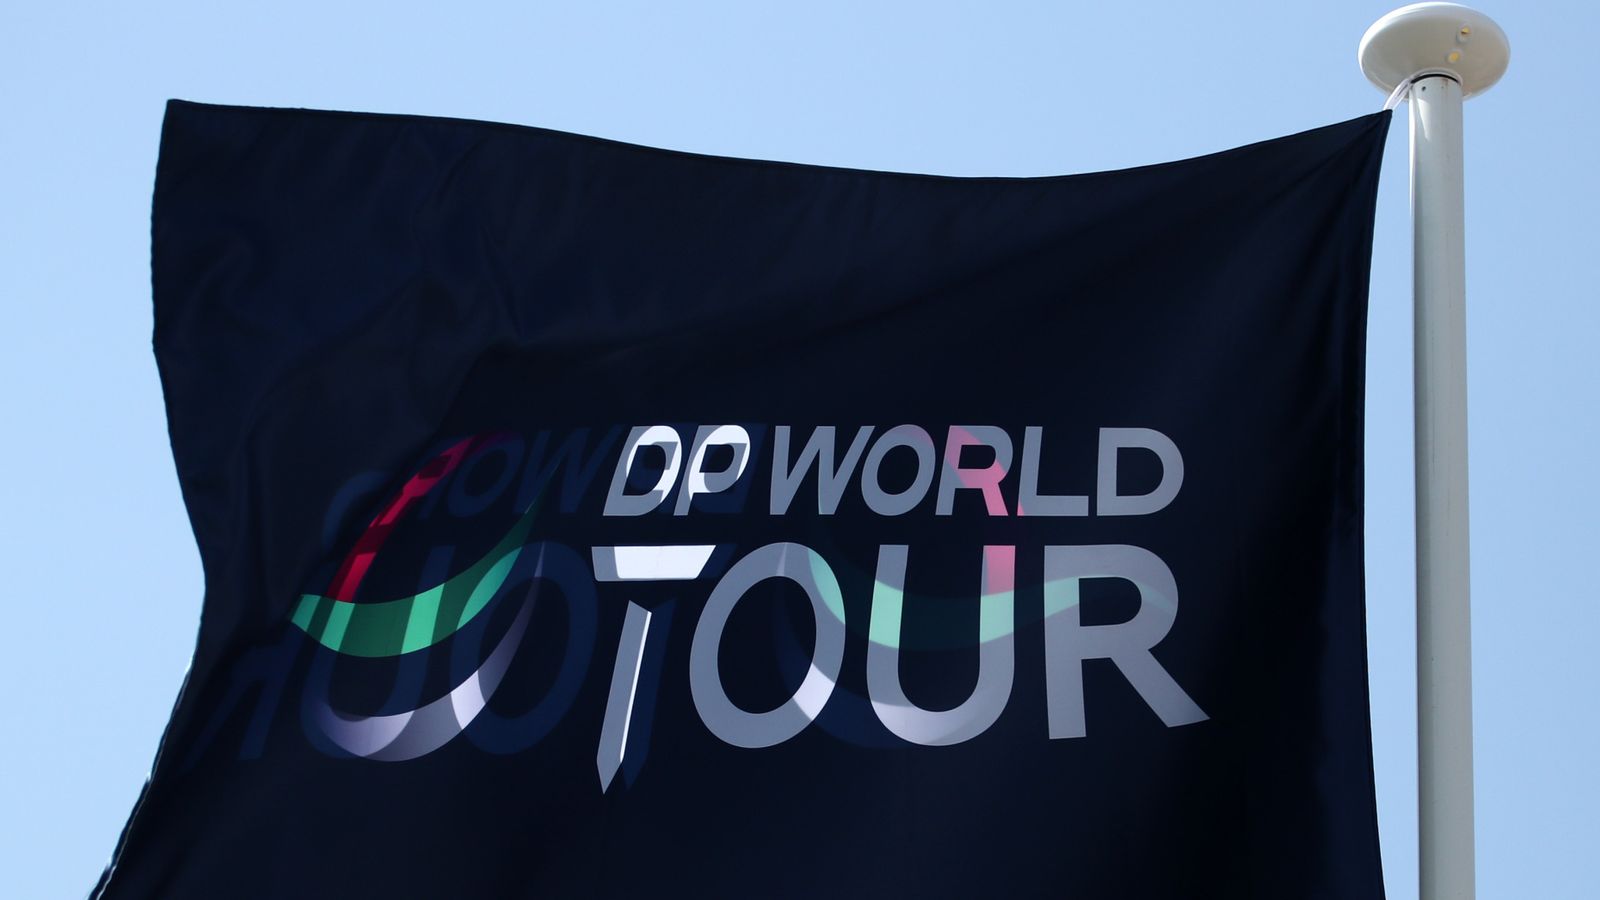 dp world tour denmark